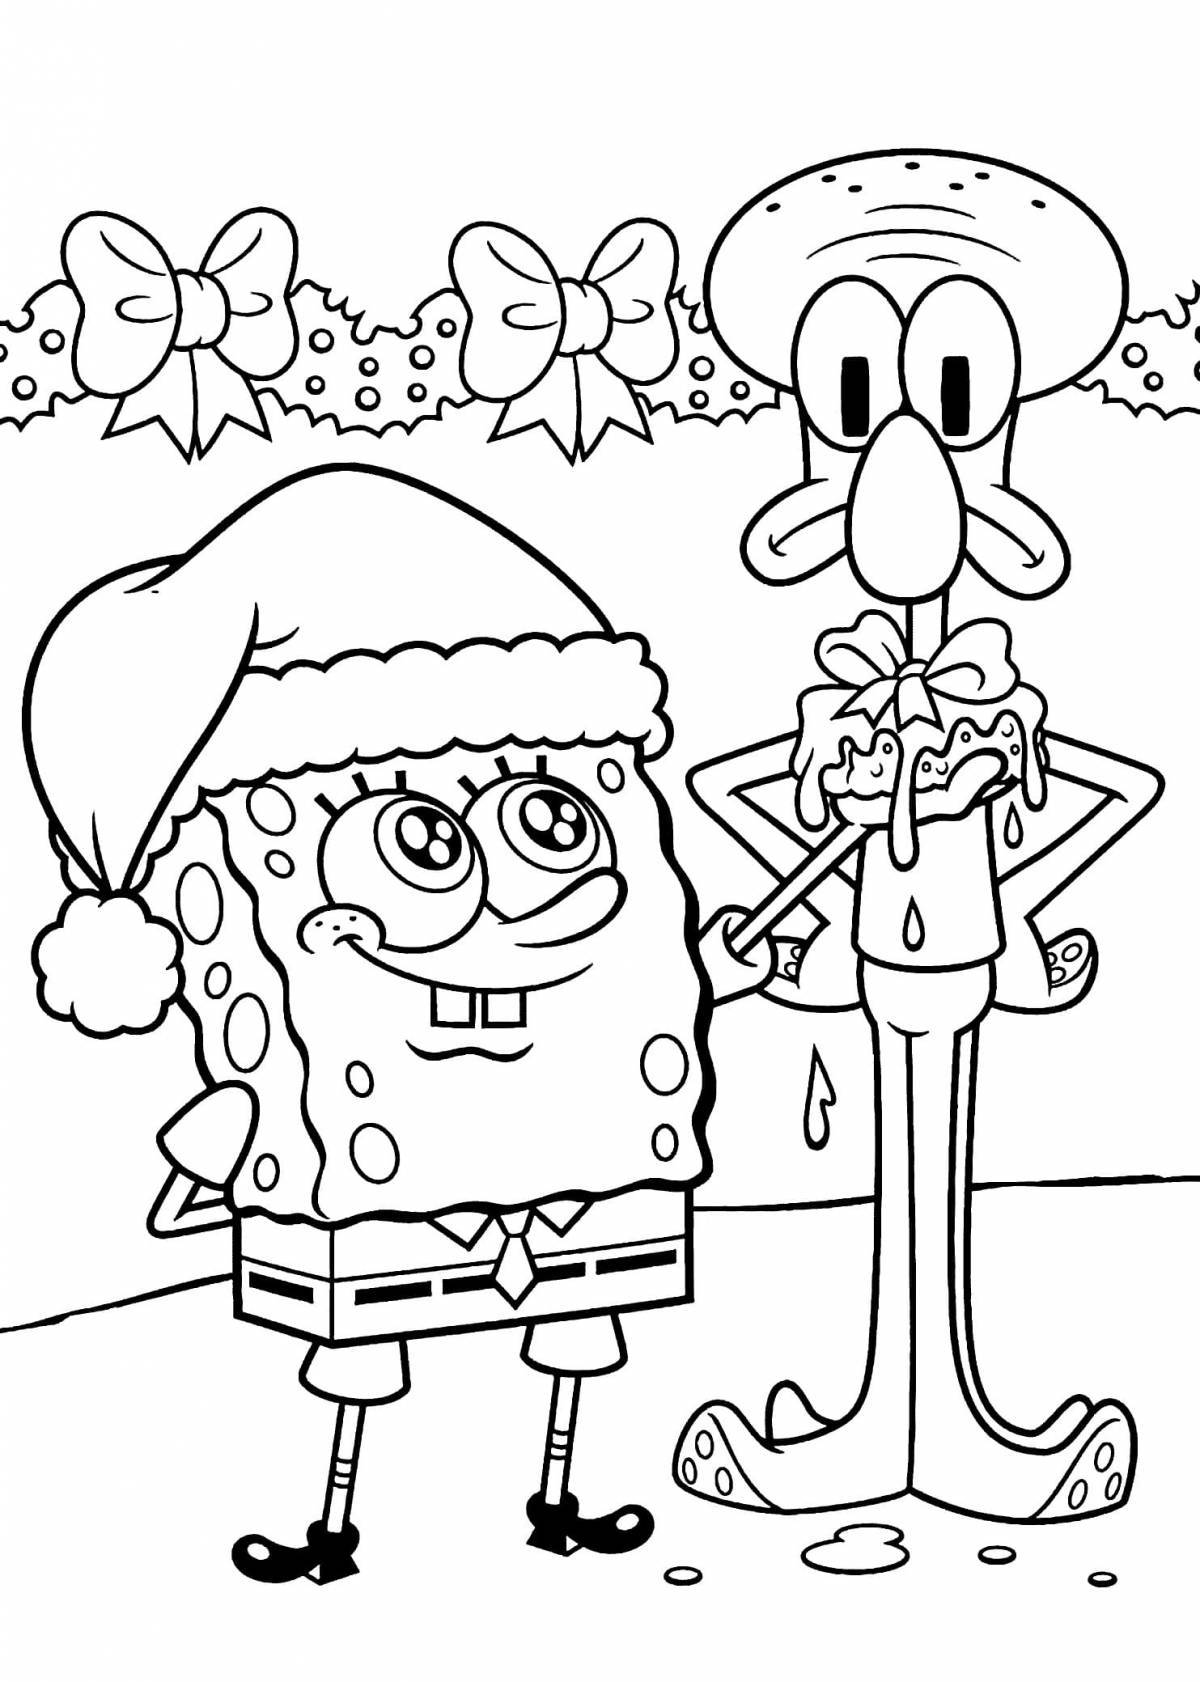 Coloring page adorable spongebob squarepants